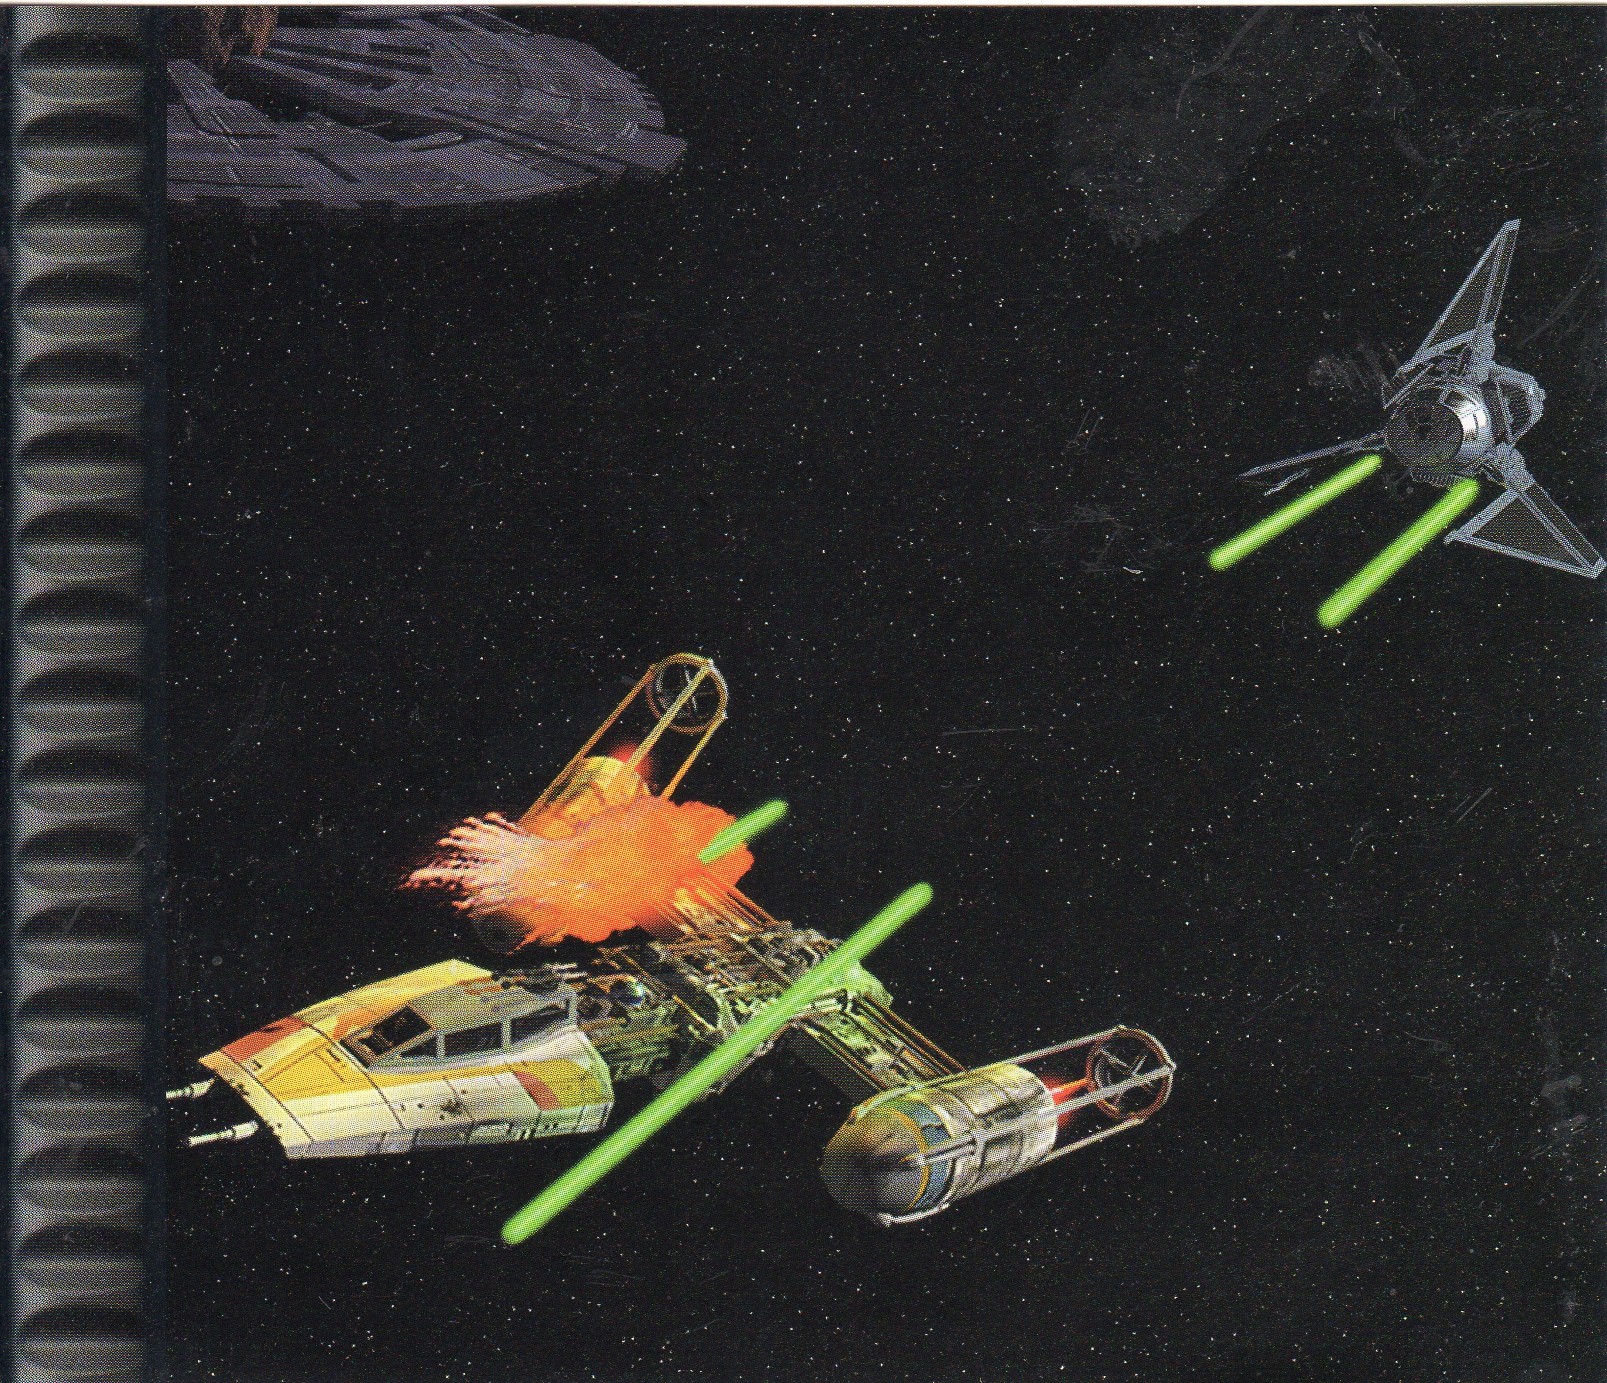 Star Wars - Rebel Assault II - The Hidden Empire PSX cover